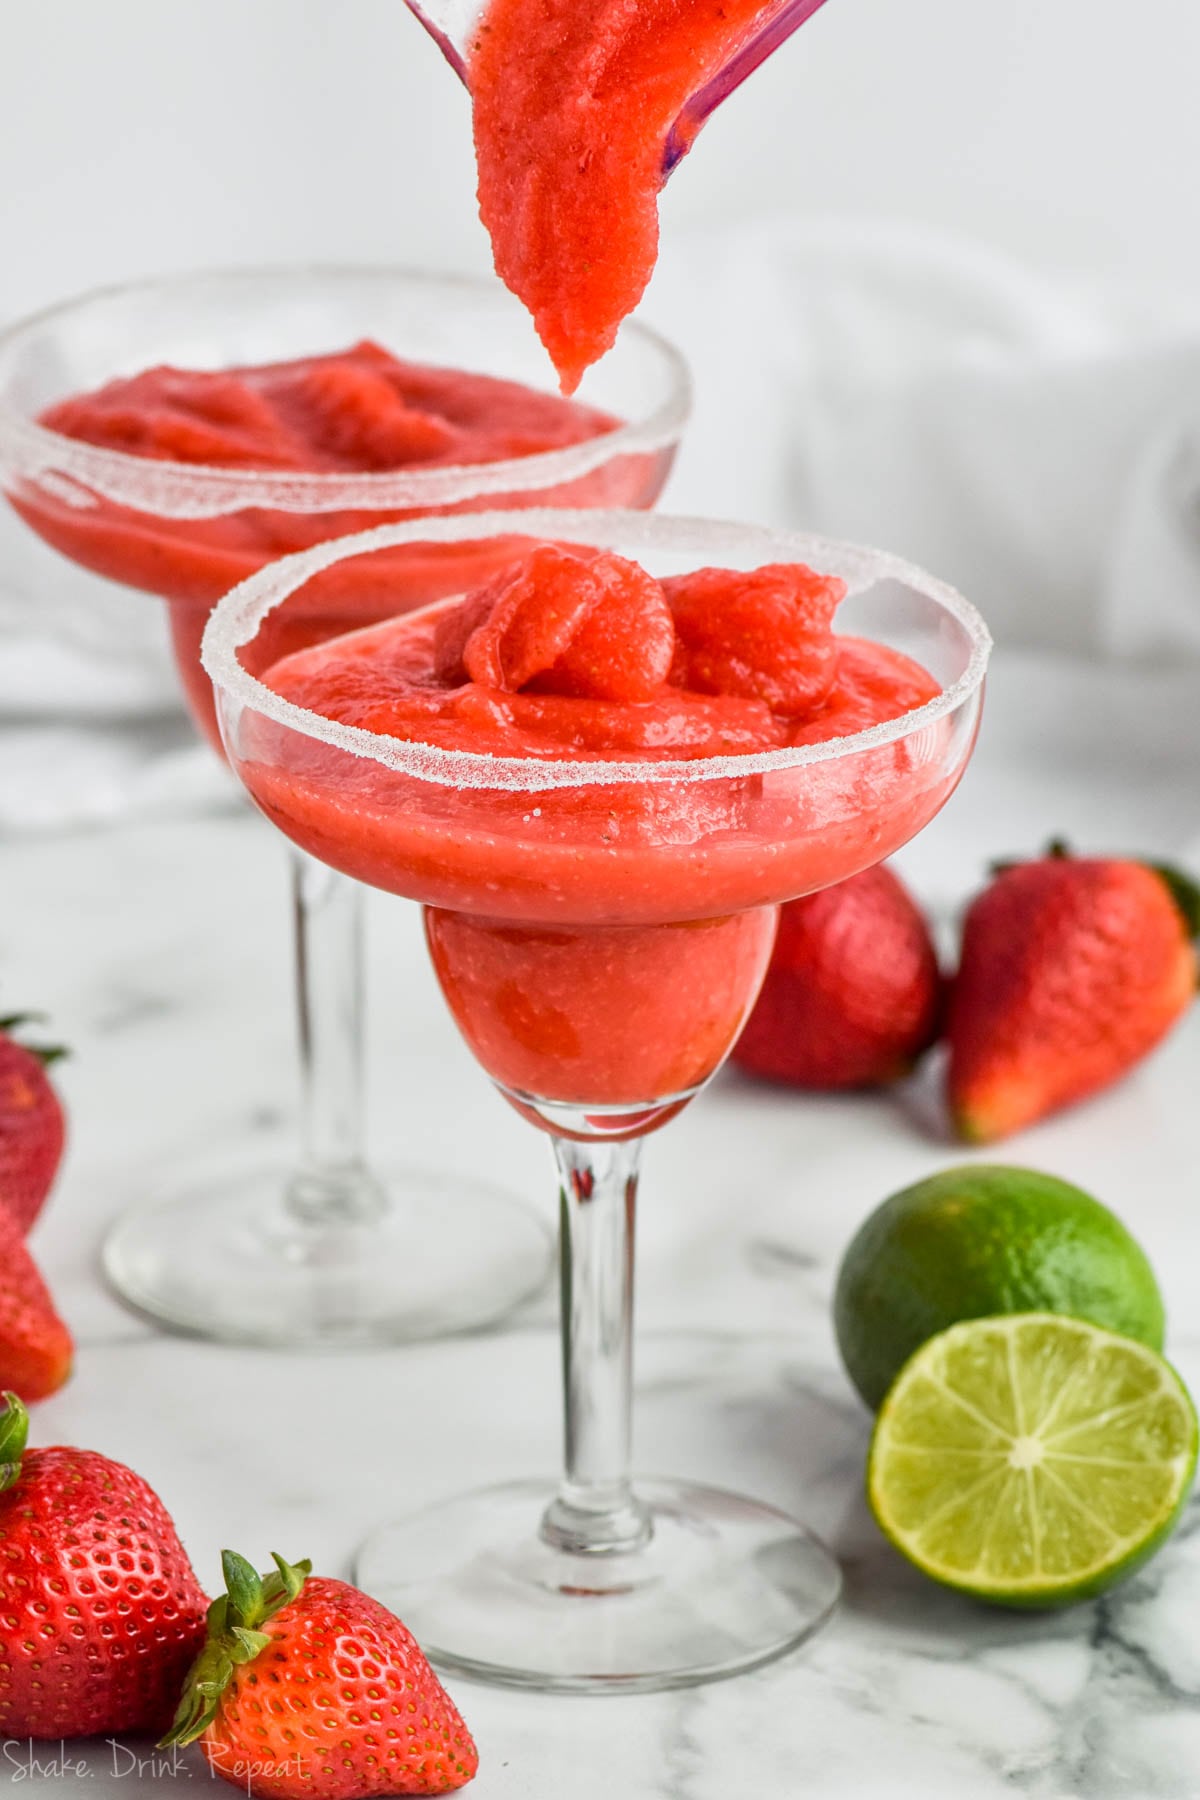 strawberry_margarita_recipe_image-2 - Shake Drink Repeat